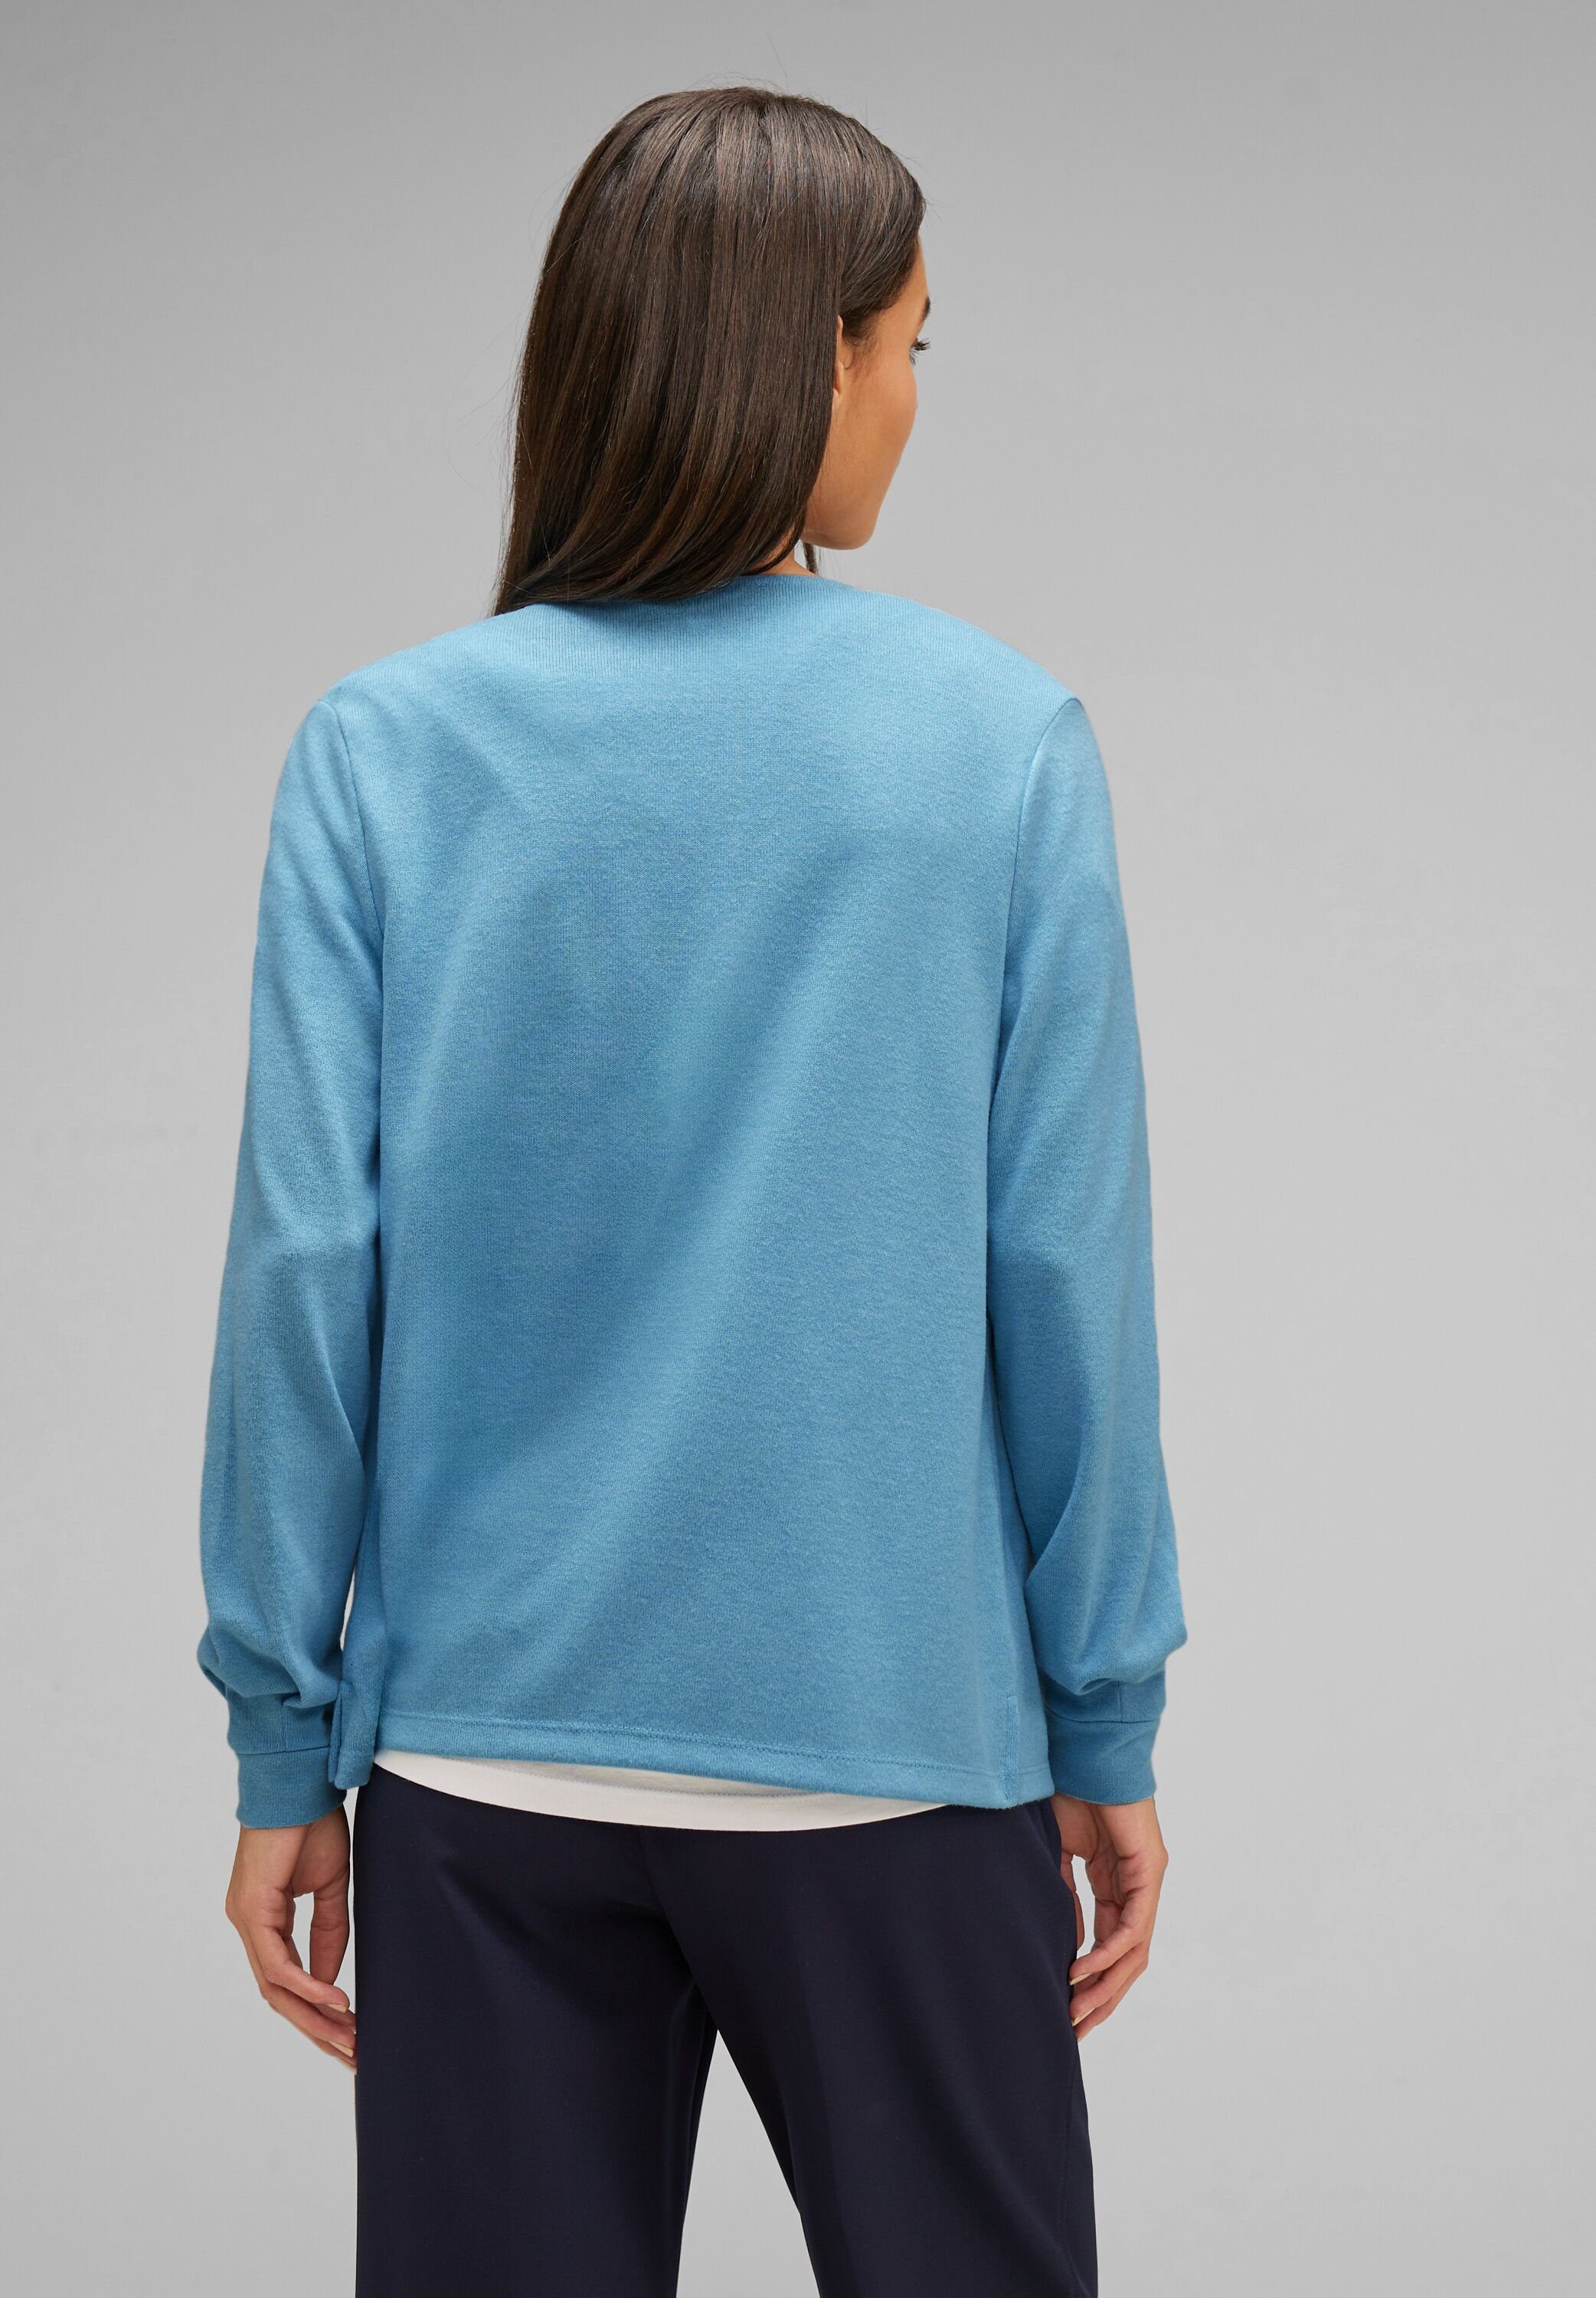 new Shirtjacke ONE aquamarine im Design mel. blue STREET light Jacy Shirtjacke QR offenen LTD Style